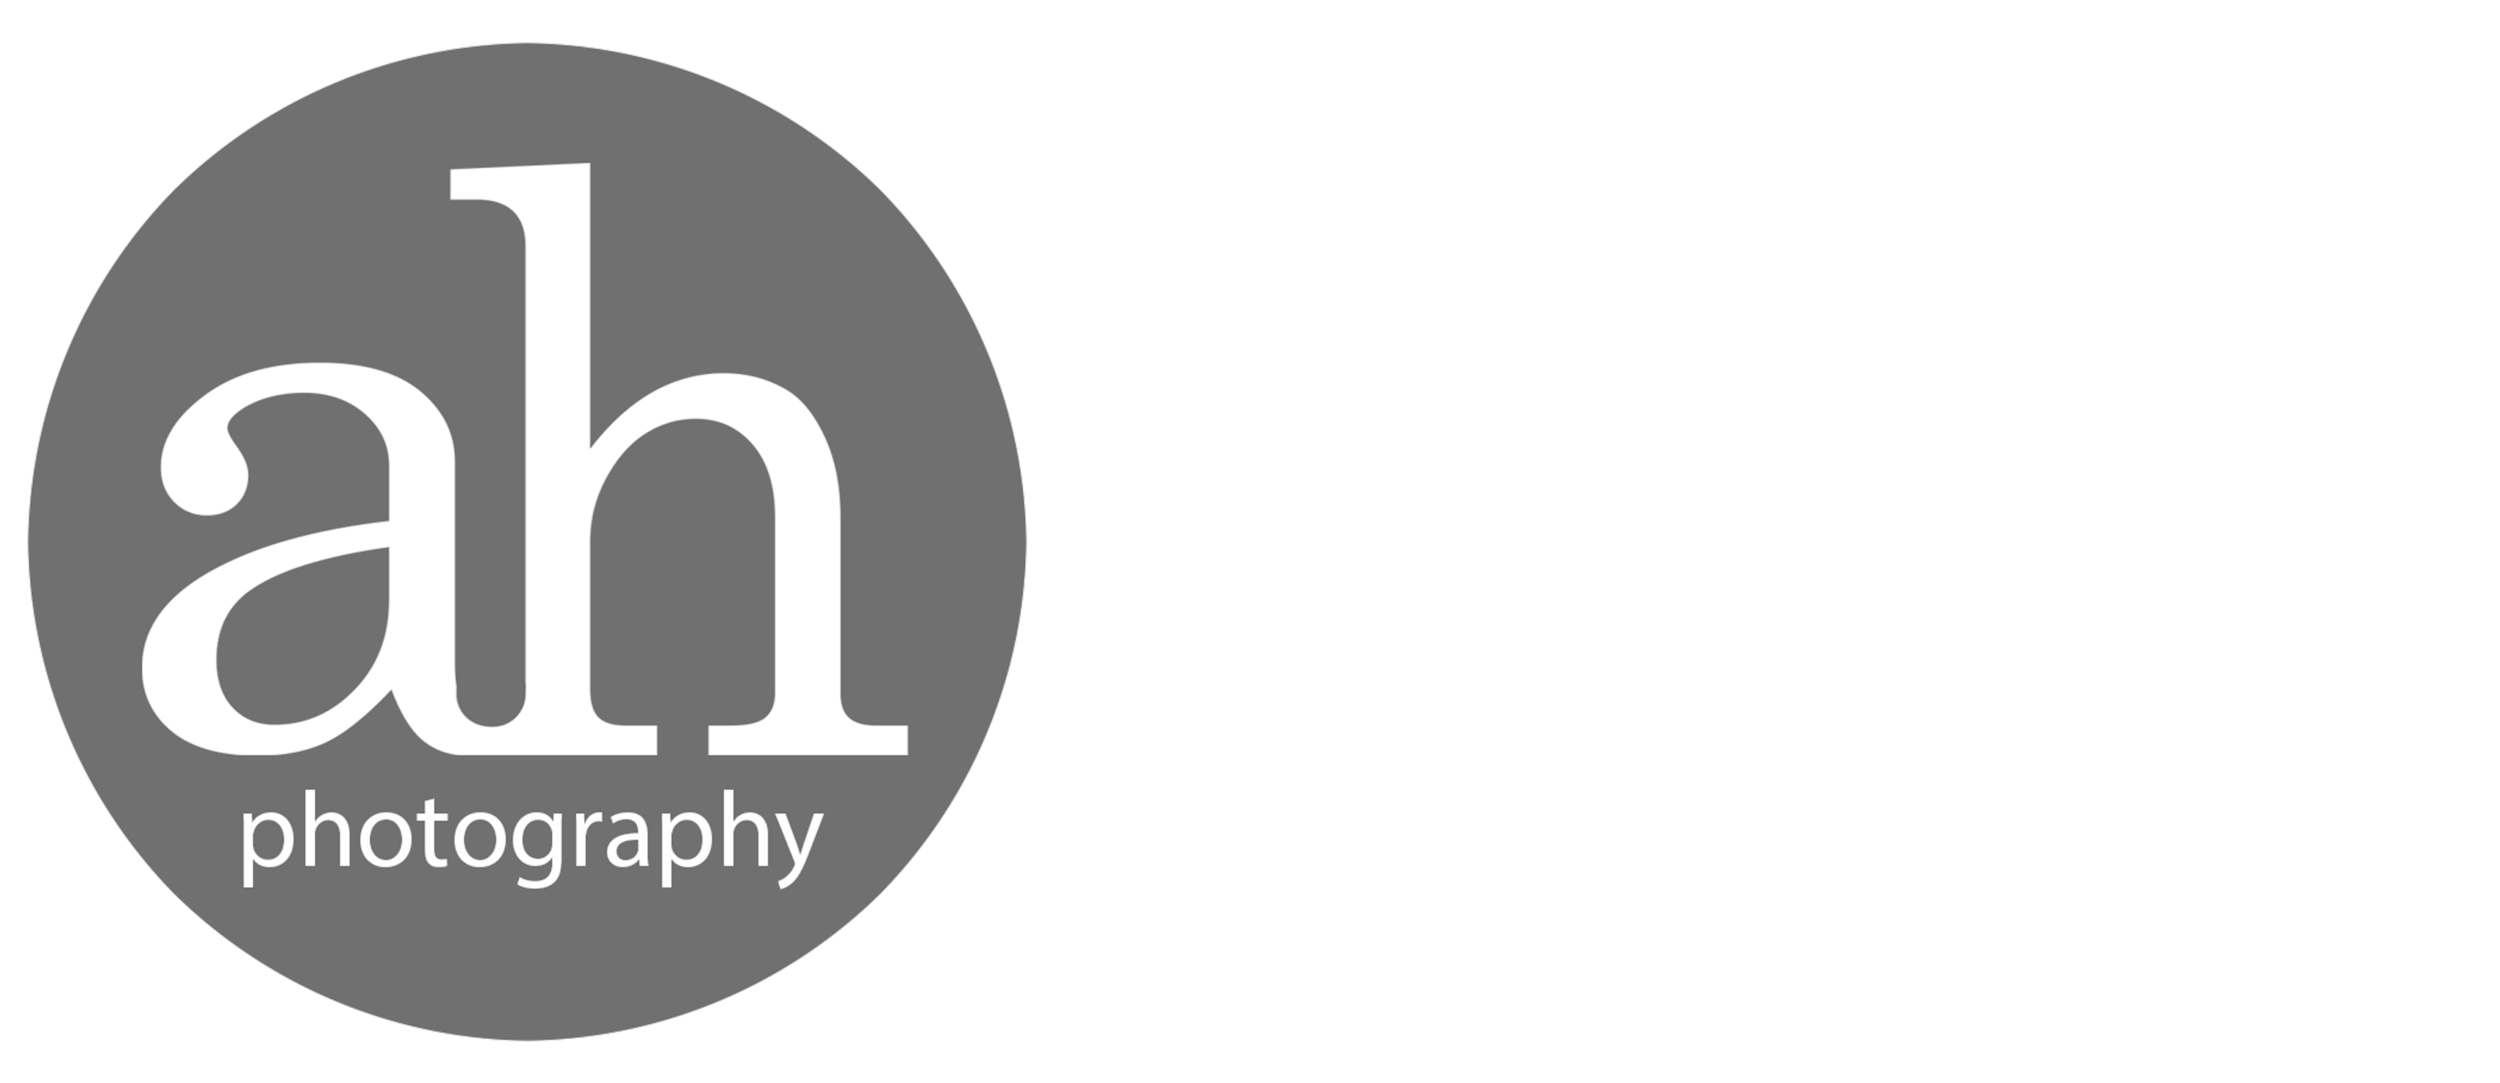 Adam Hillier Photography